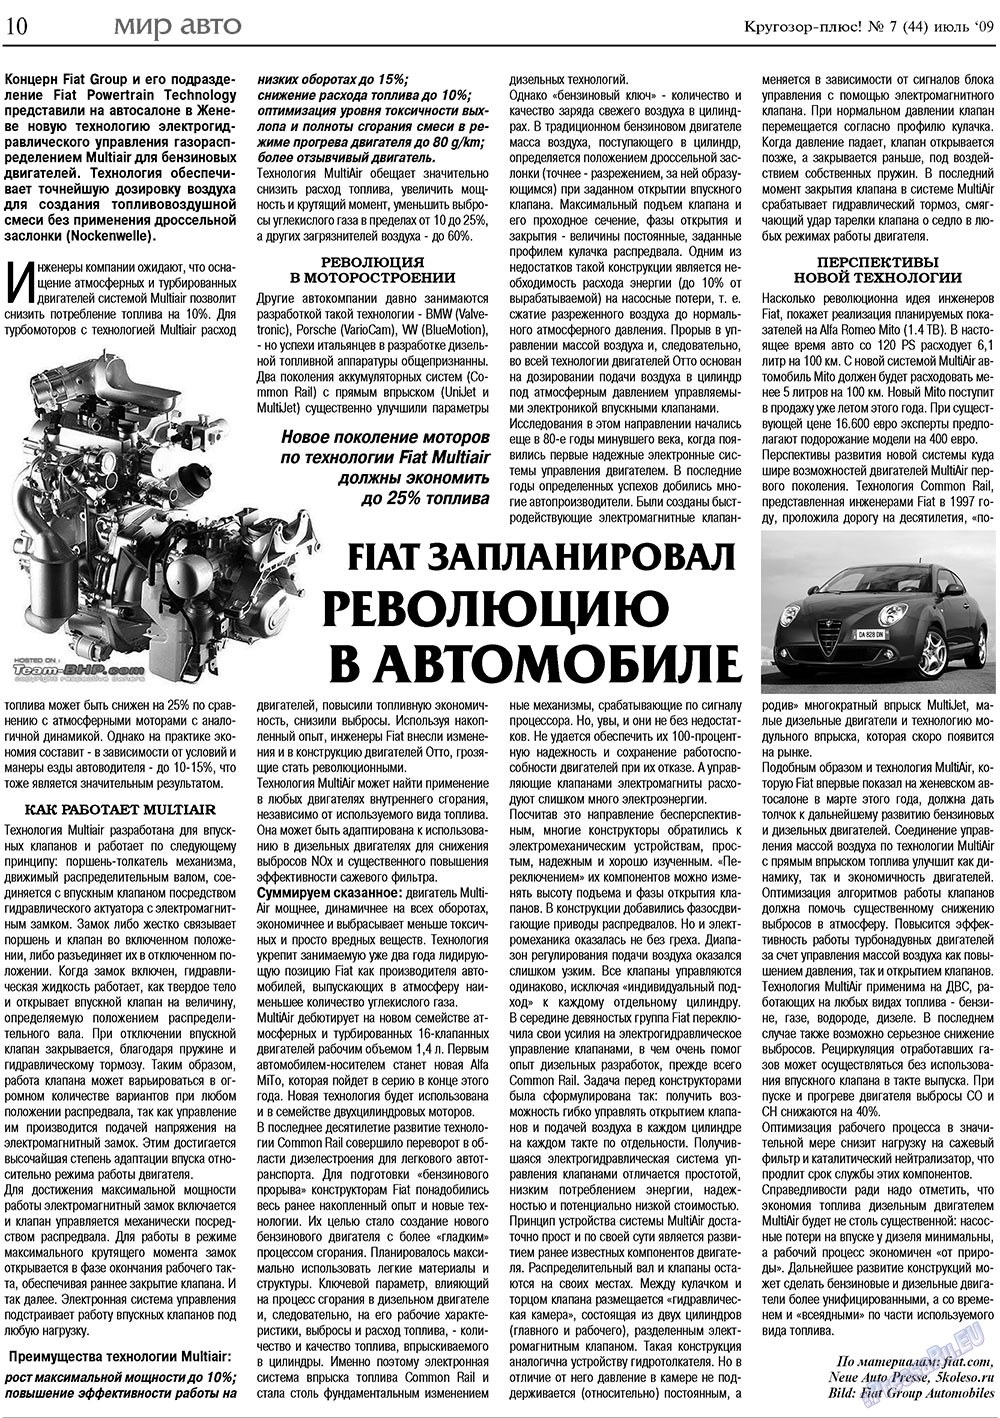 Кругозор плюс! (газета). 2009 год, номер 7, стр. 10